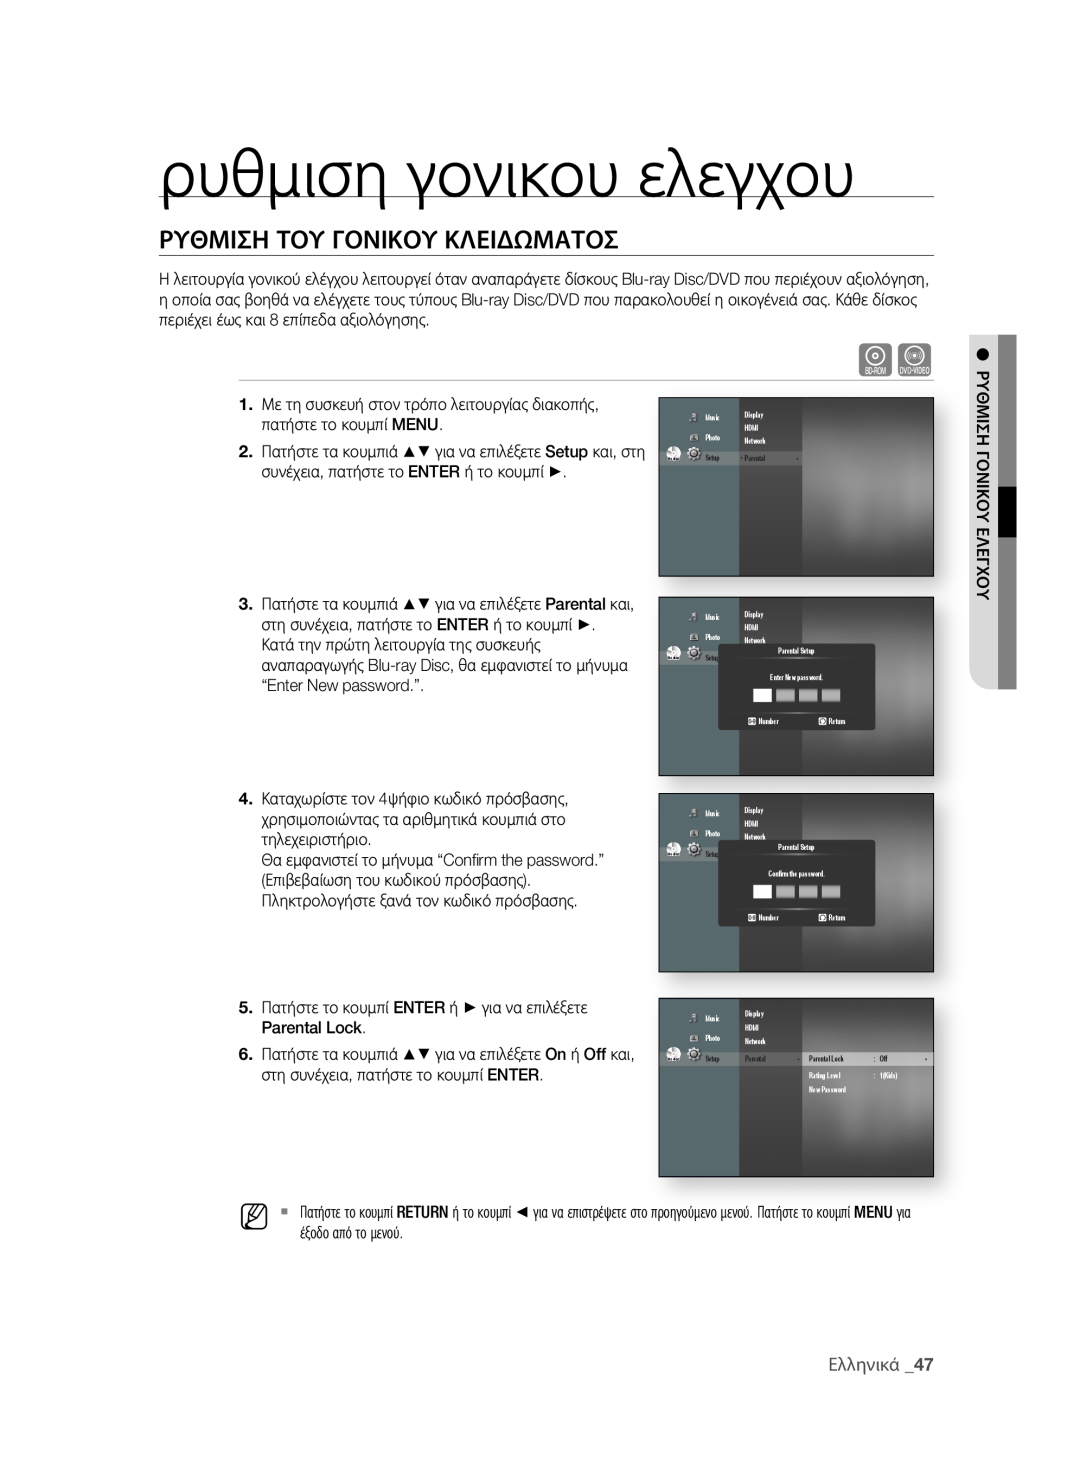 Samsung BD-P1580/EDC ρυθμιση γονικου ελεγχου, ρΥθΜιση ΤοΥ ΓοΝιΚοΥ ΚΛειδΩΜΑΤοσ, Πατήστε το κουμπί ENTER ή για να επιλέξετε 